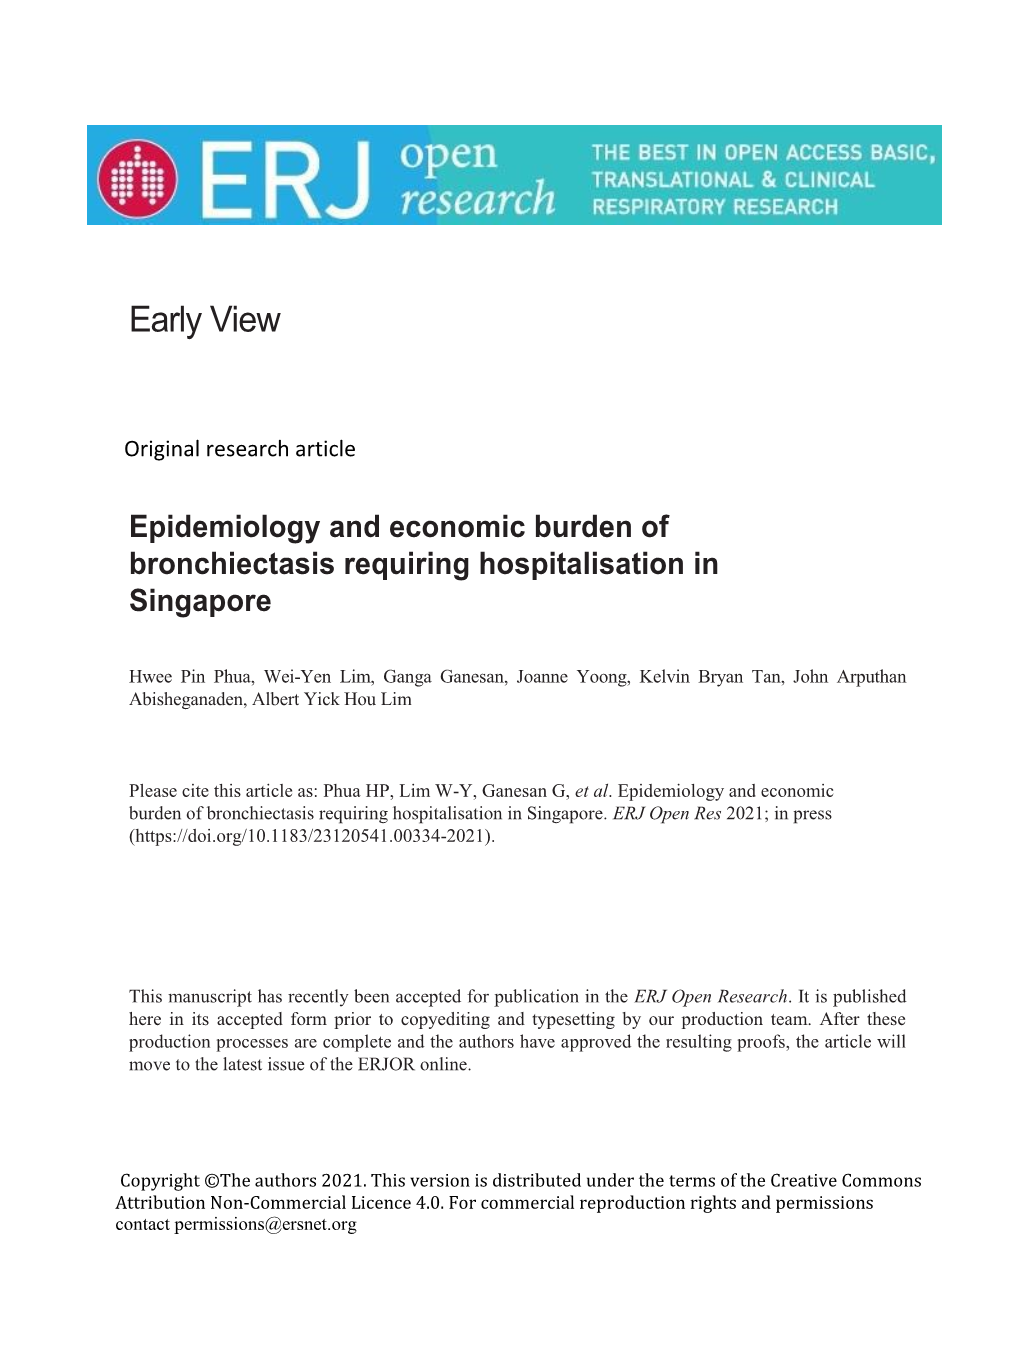 Epidemiology and Economic Burden of Bronchiectasis Requiring Hospitalisation in Singapore